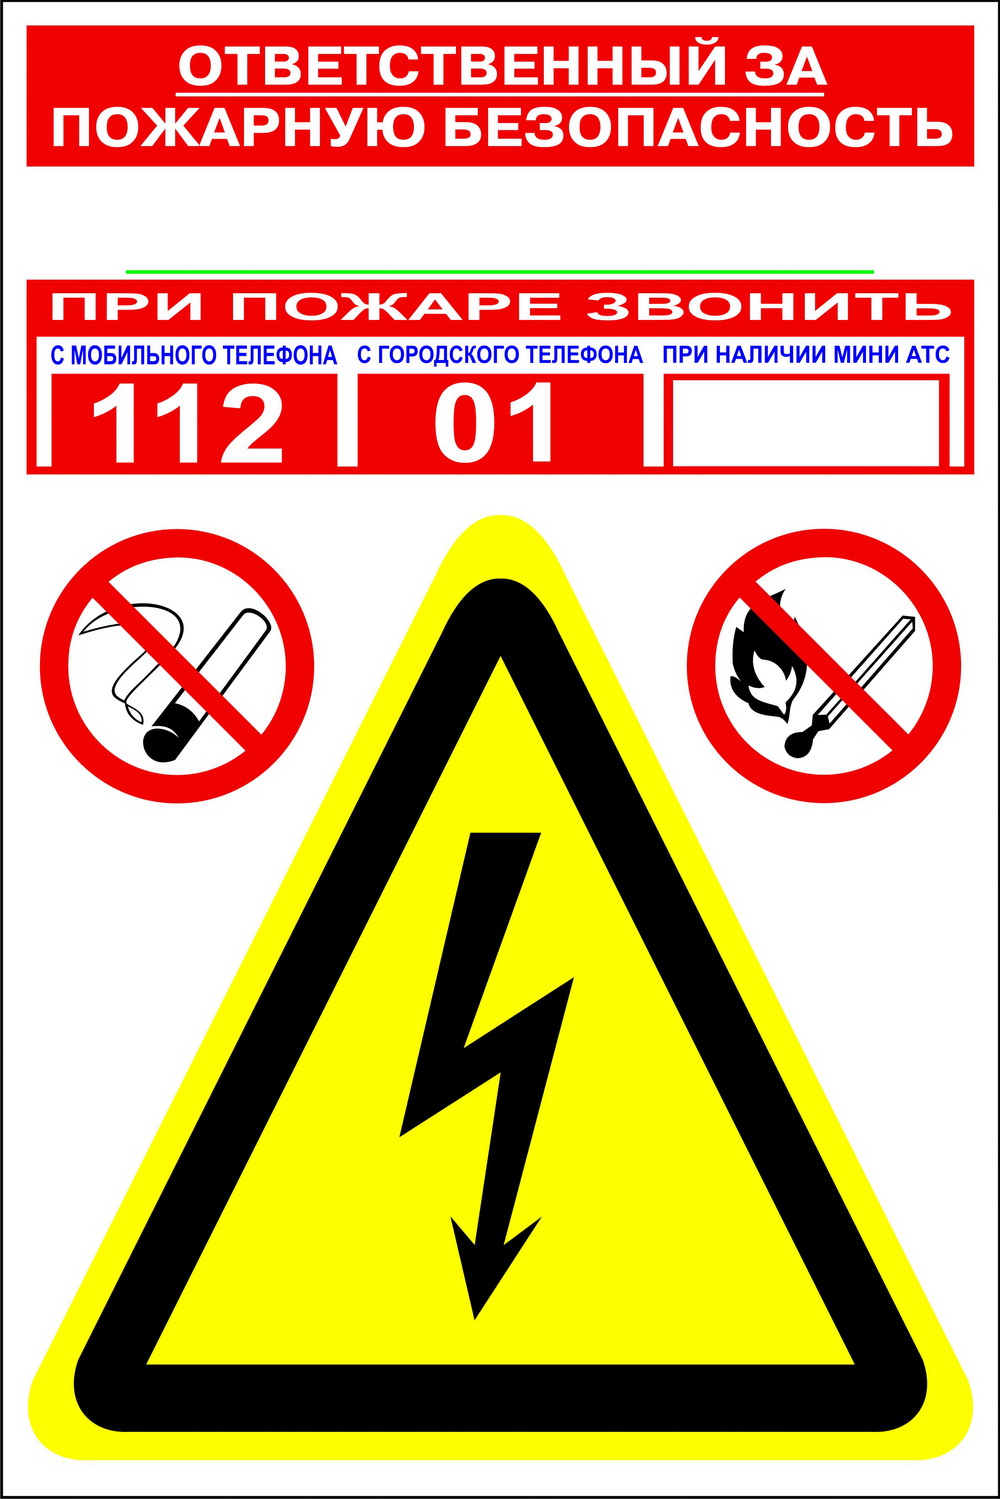 http://pozhproekt.ru/wp-content/uploads/2010/06/electro.jpg